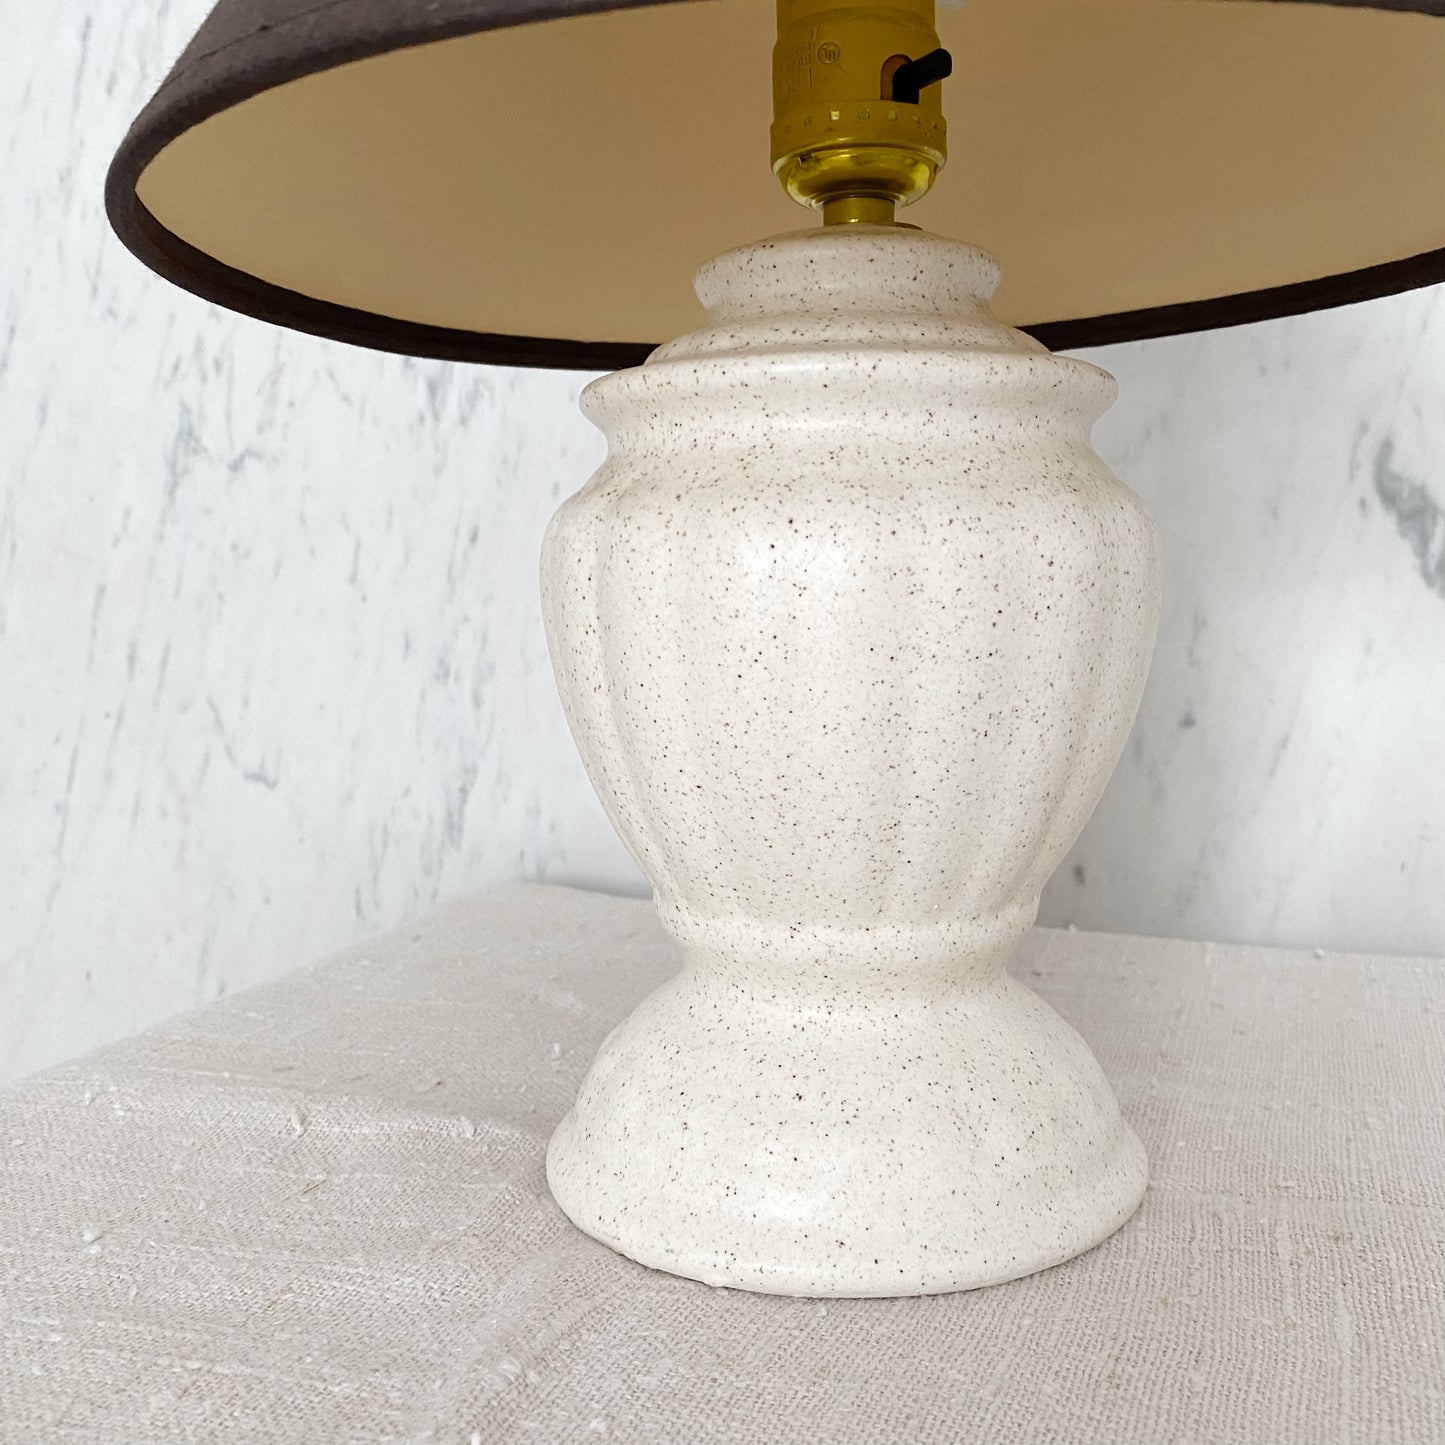 Vintage Ceramic Lamp with Black Shade